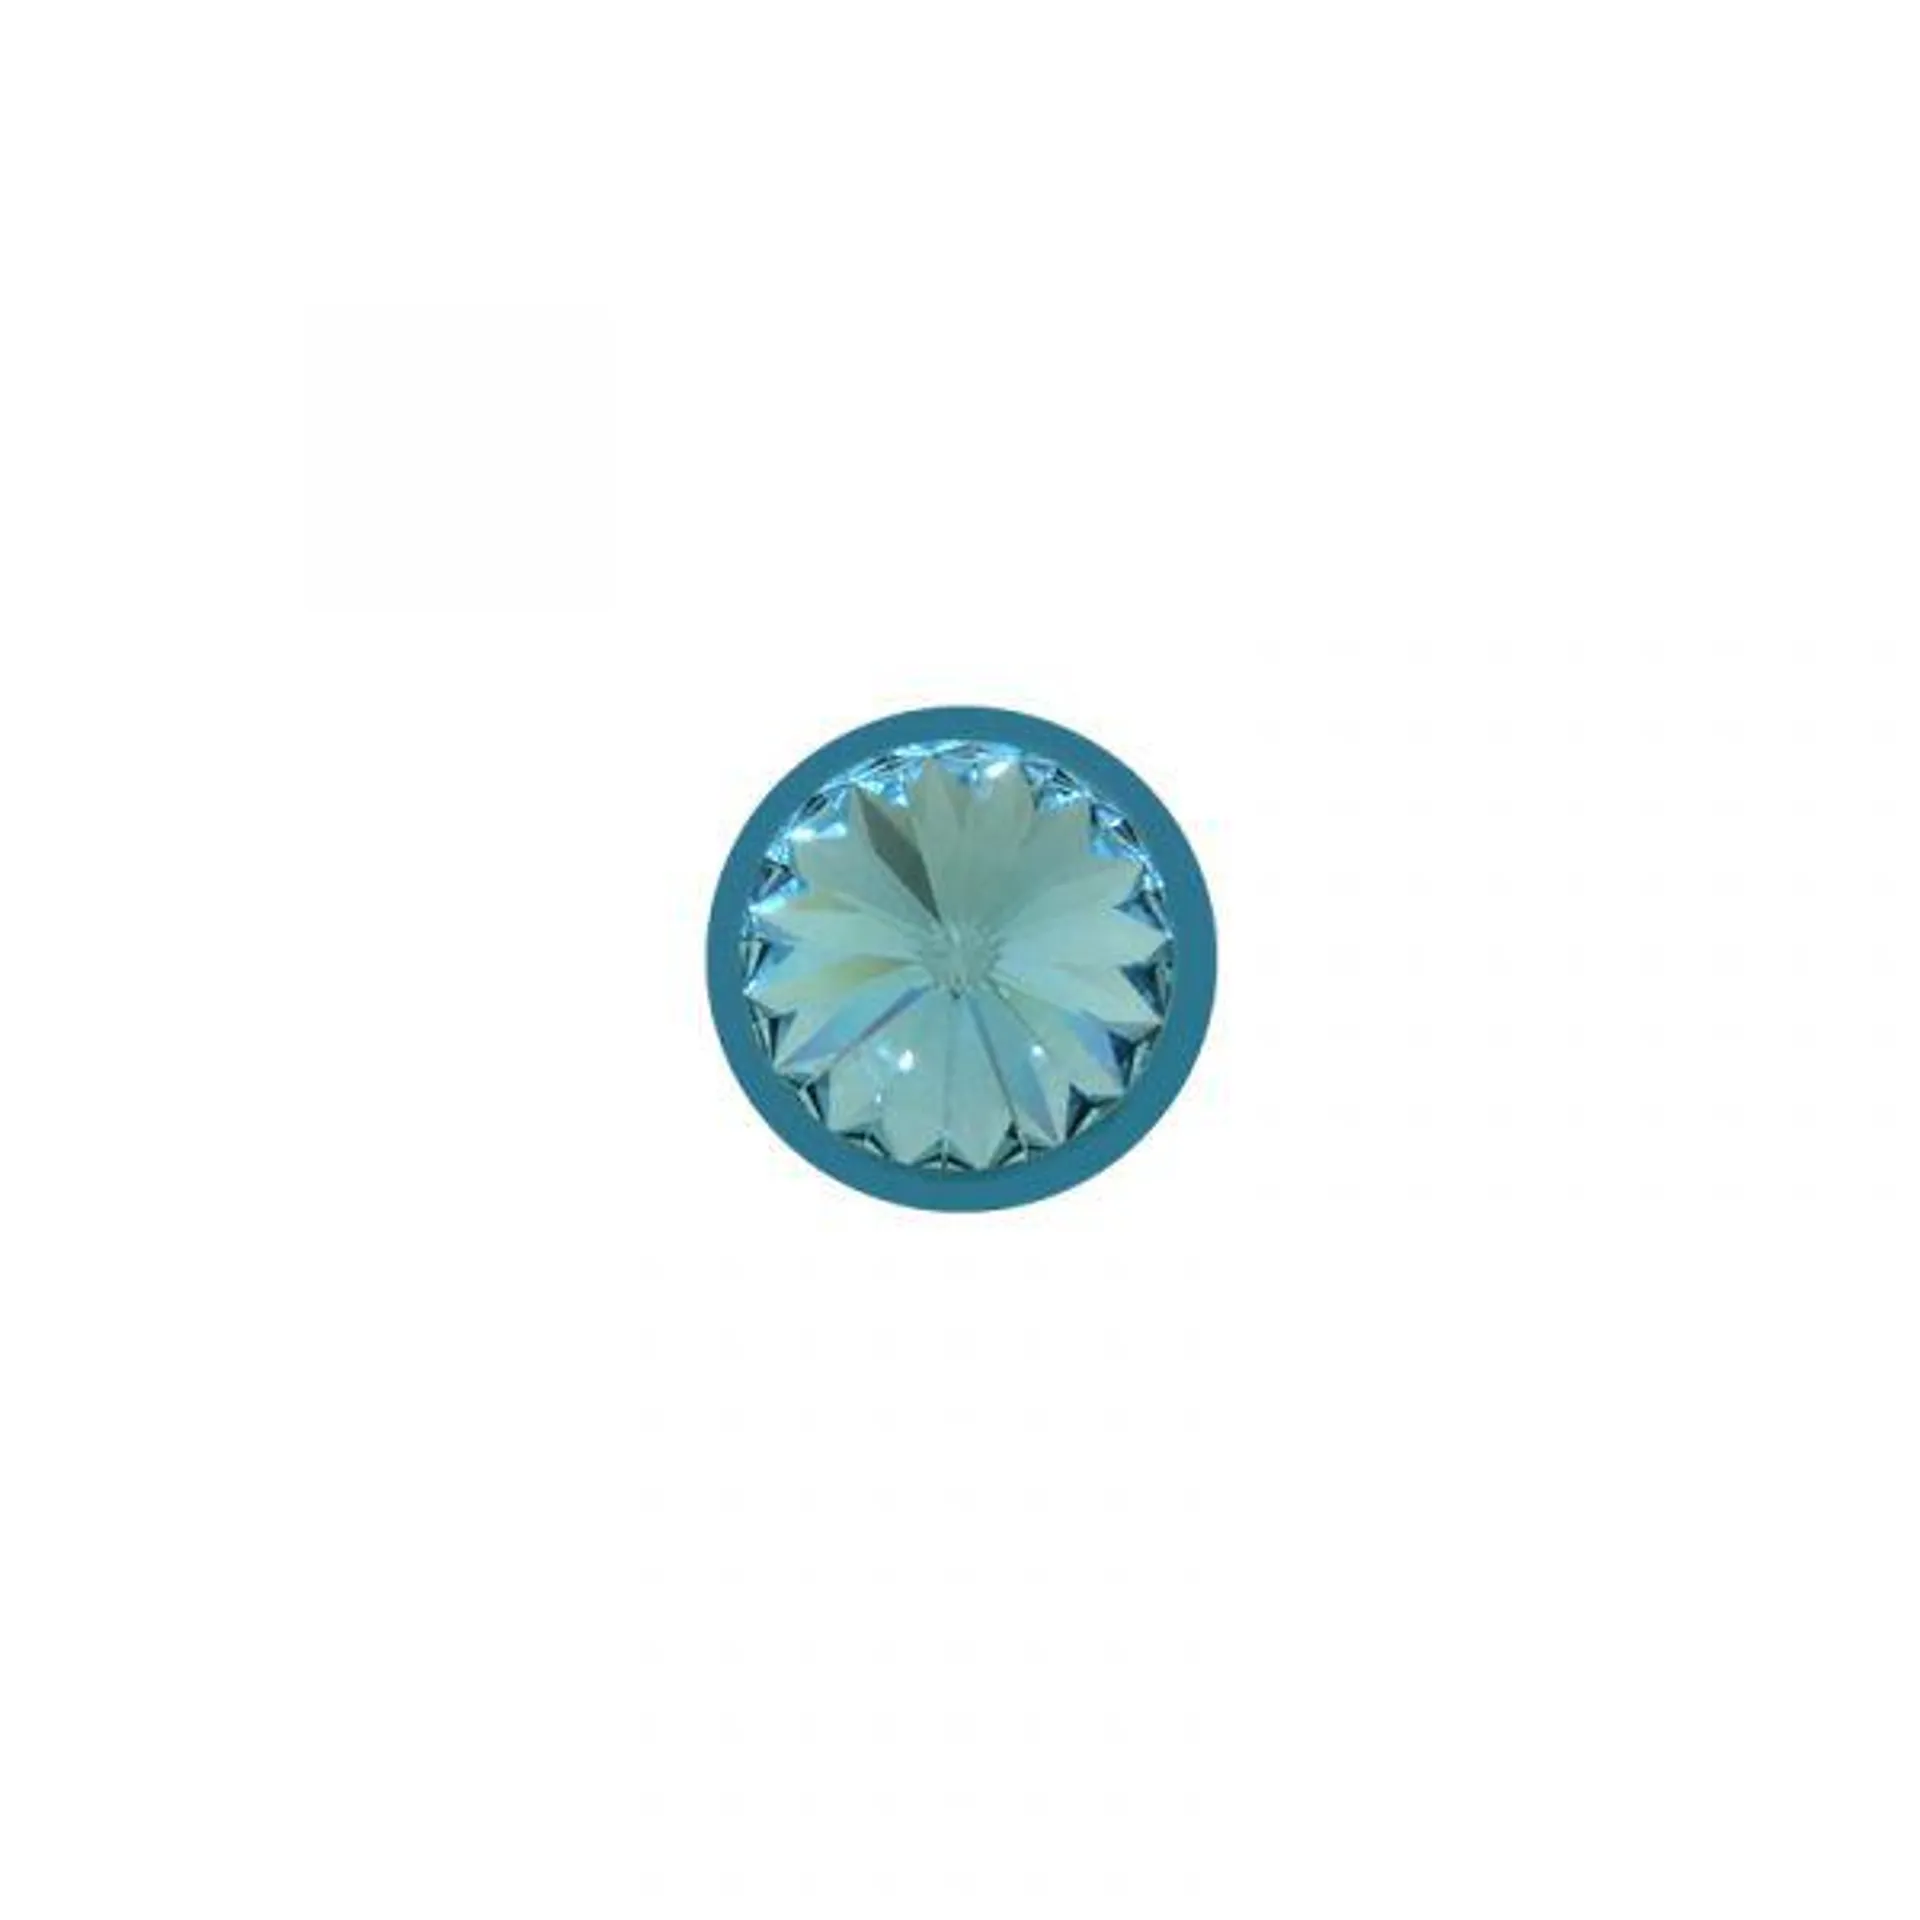 MY iMenso "aquamarine" "man made crystal" element Insignia 14mm (925/rhod-plated)